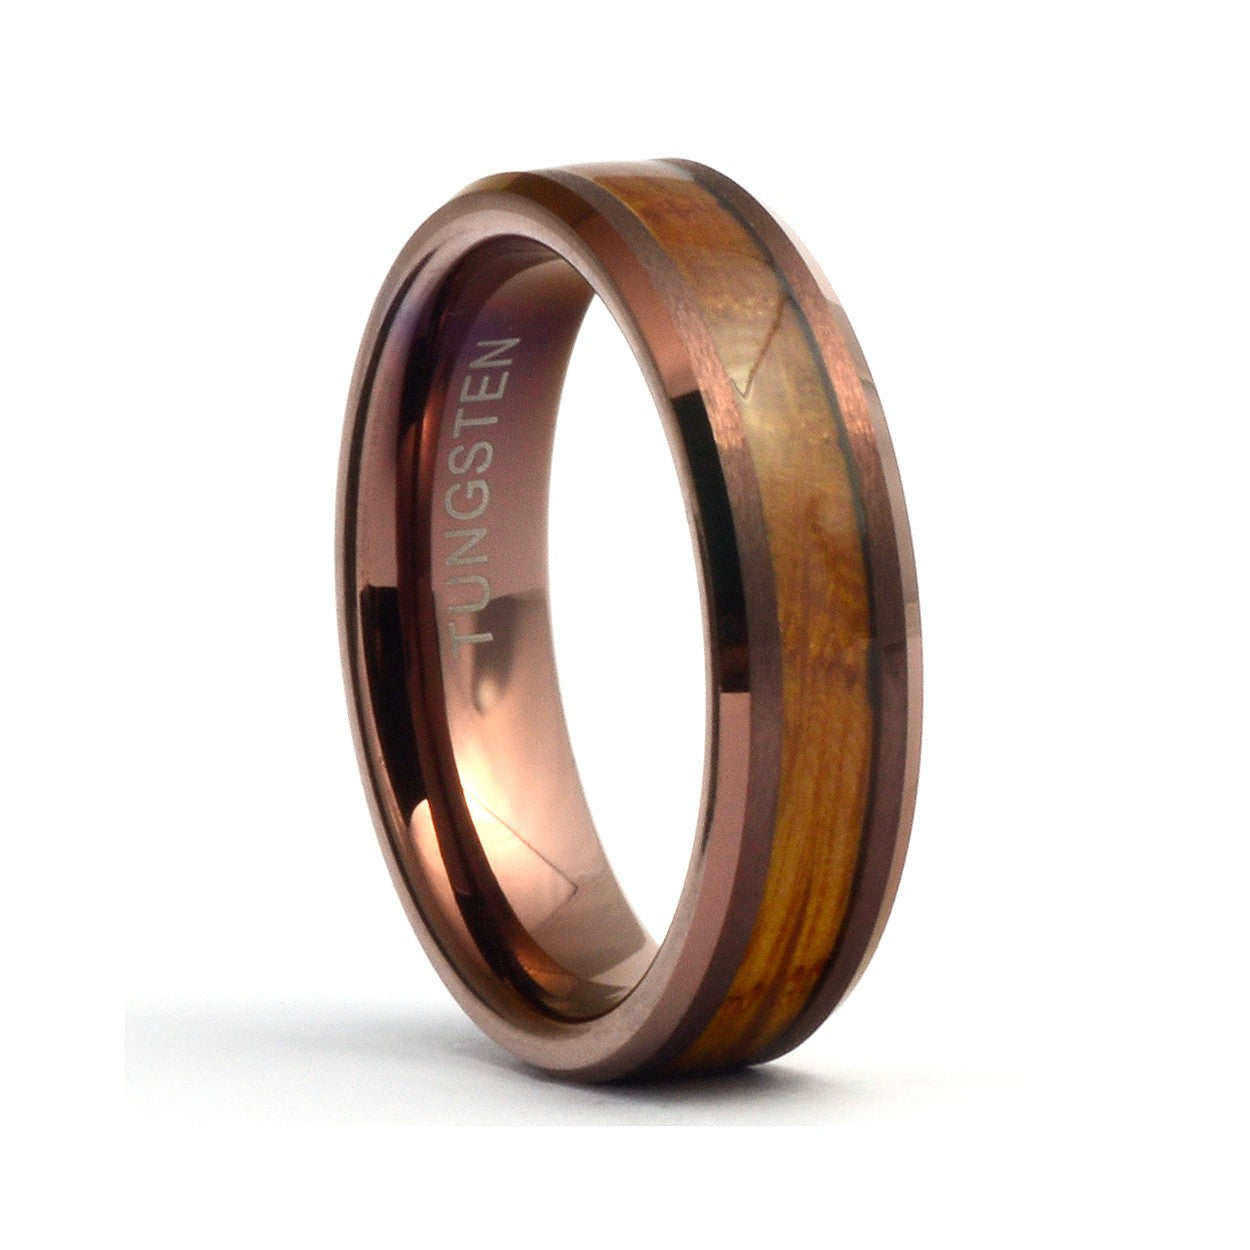 The King - Tungsten Men's Wedding Band - Whiskey Barrel Ring